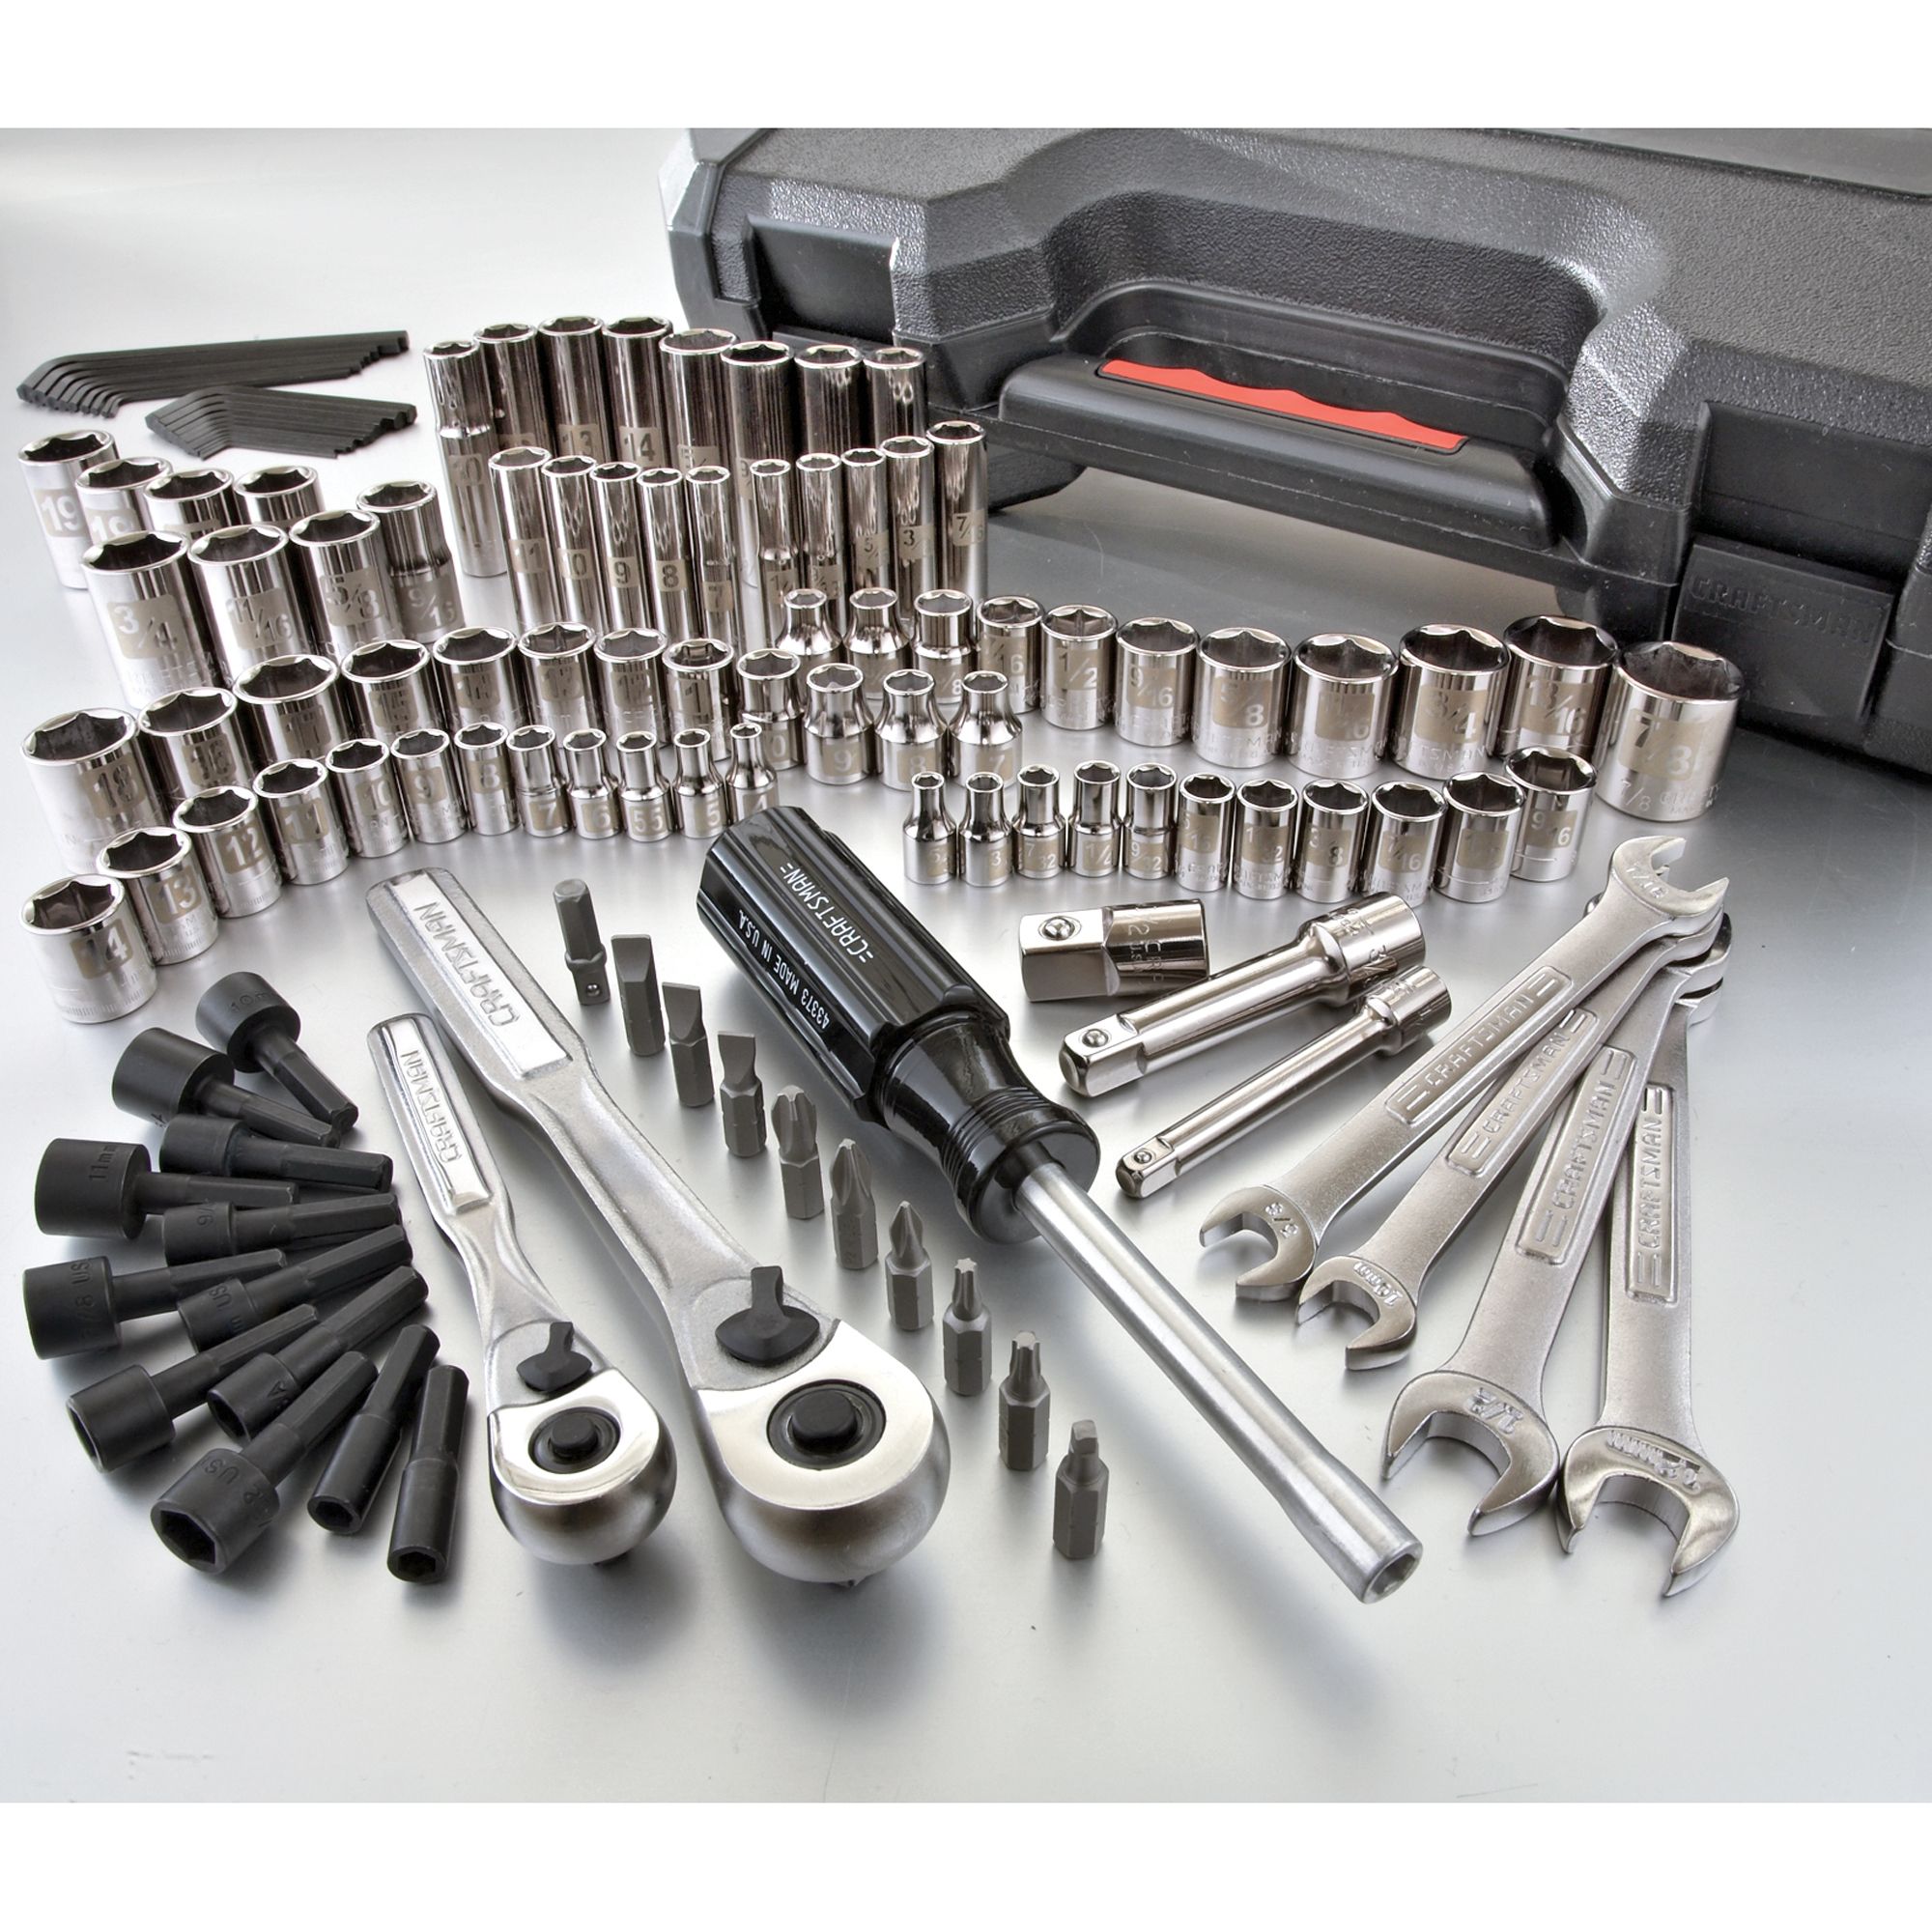 Craftsman 124 pc. 6 pt. Dual Marked Mechanics Tool Set with Case